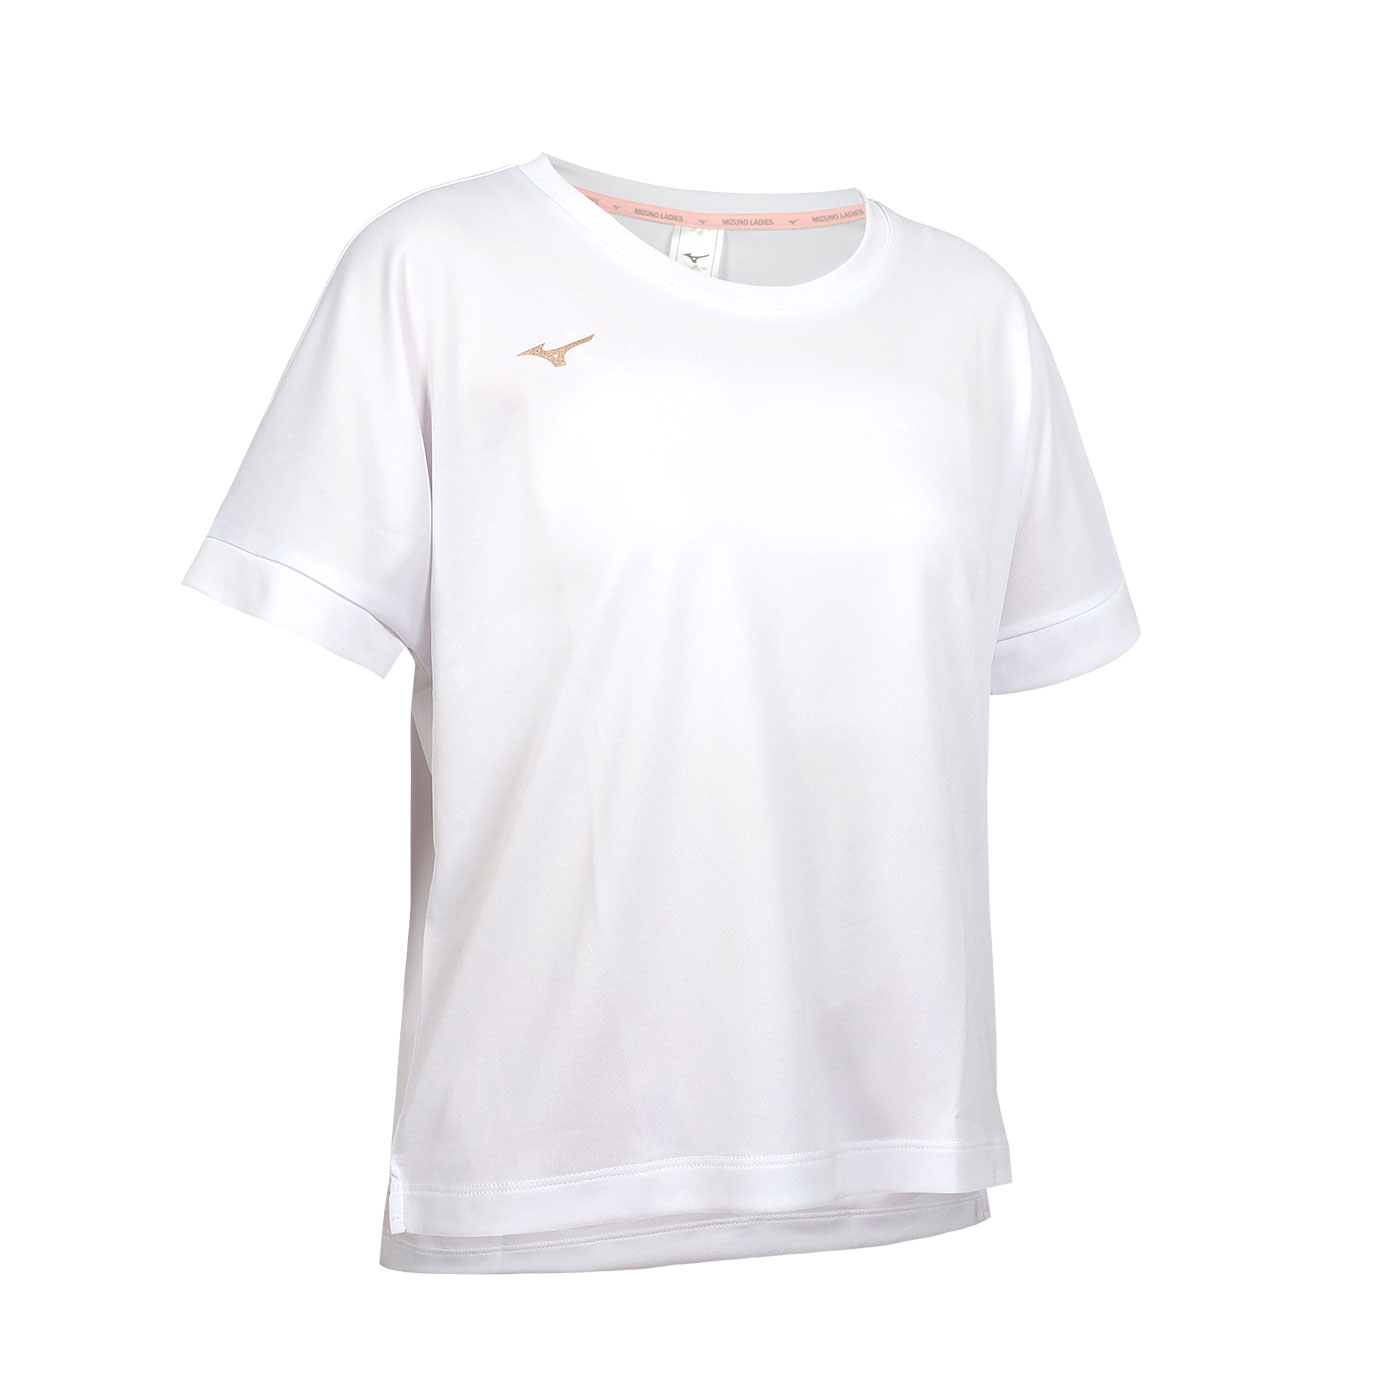 MIZUNO 女款短袖T恤  32TAB20201 - 白玫瑰金粉